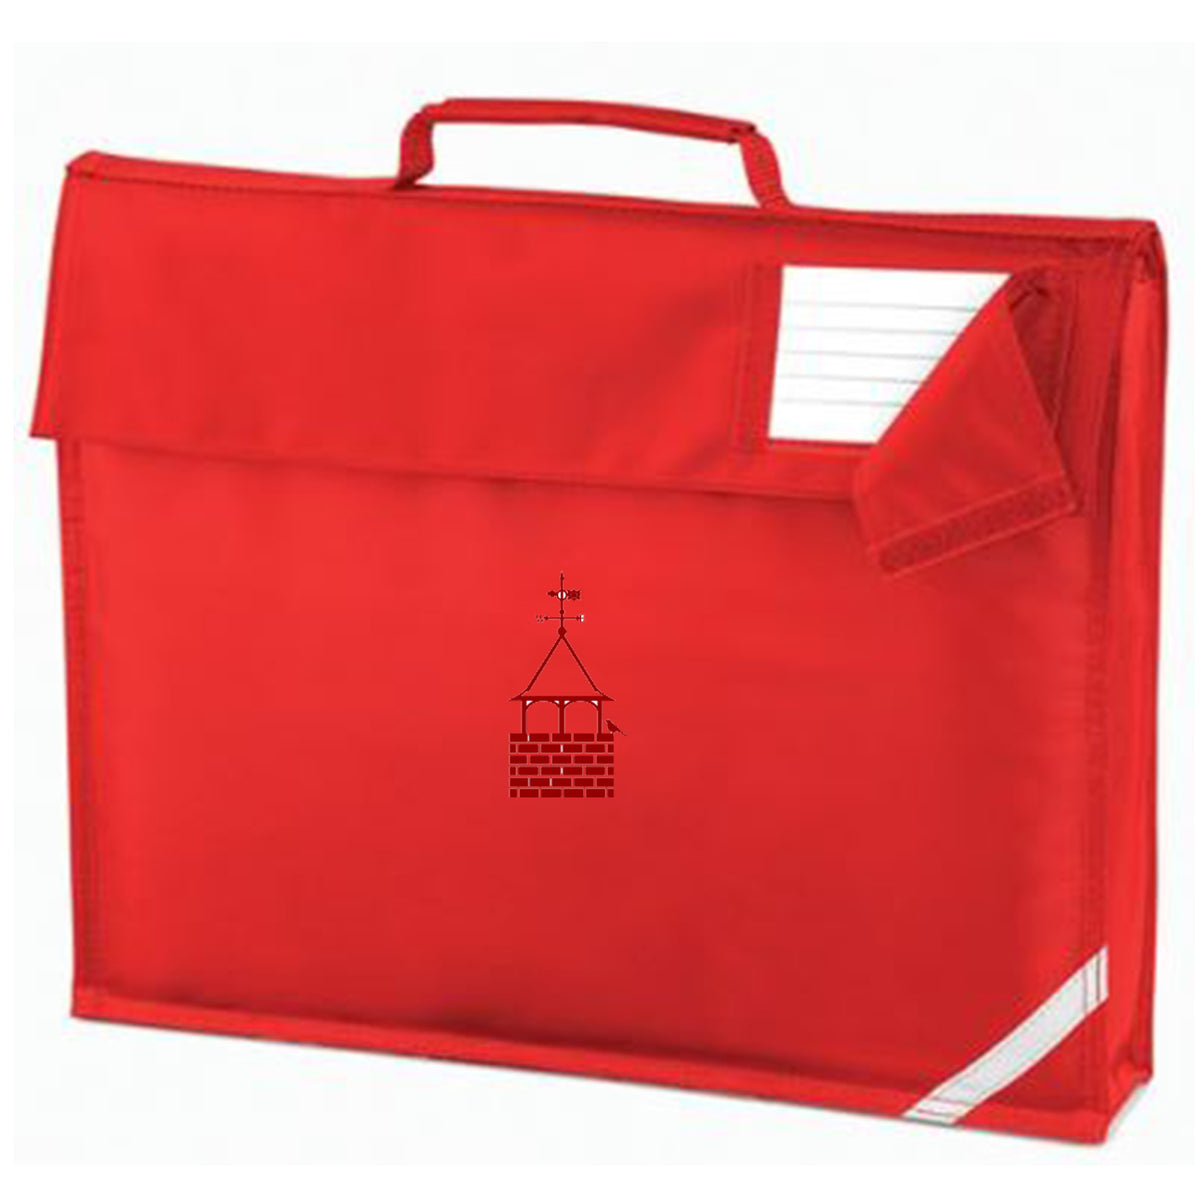 Juniper Hill School Book Bag: Red